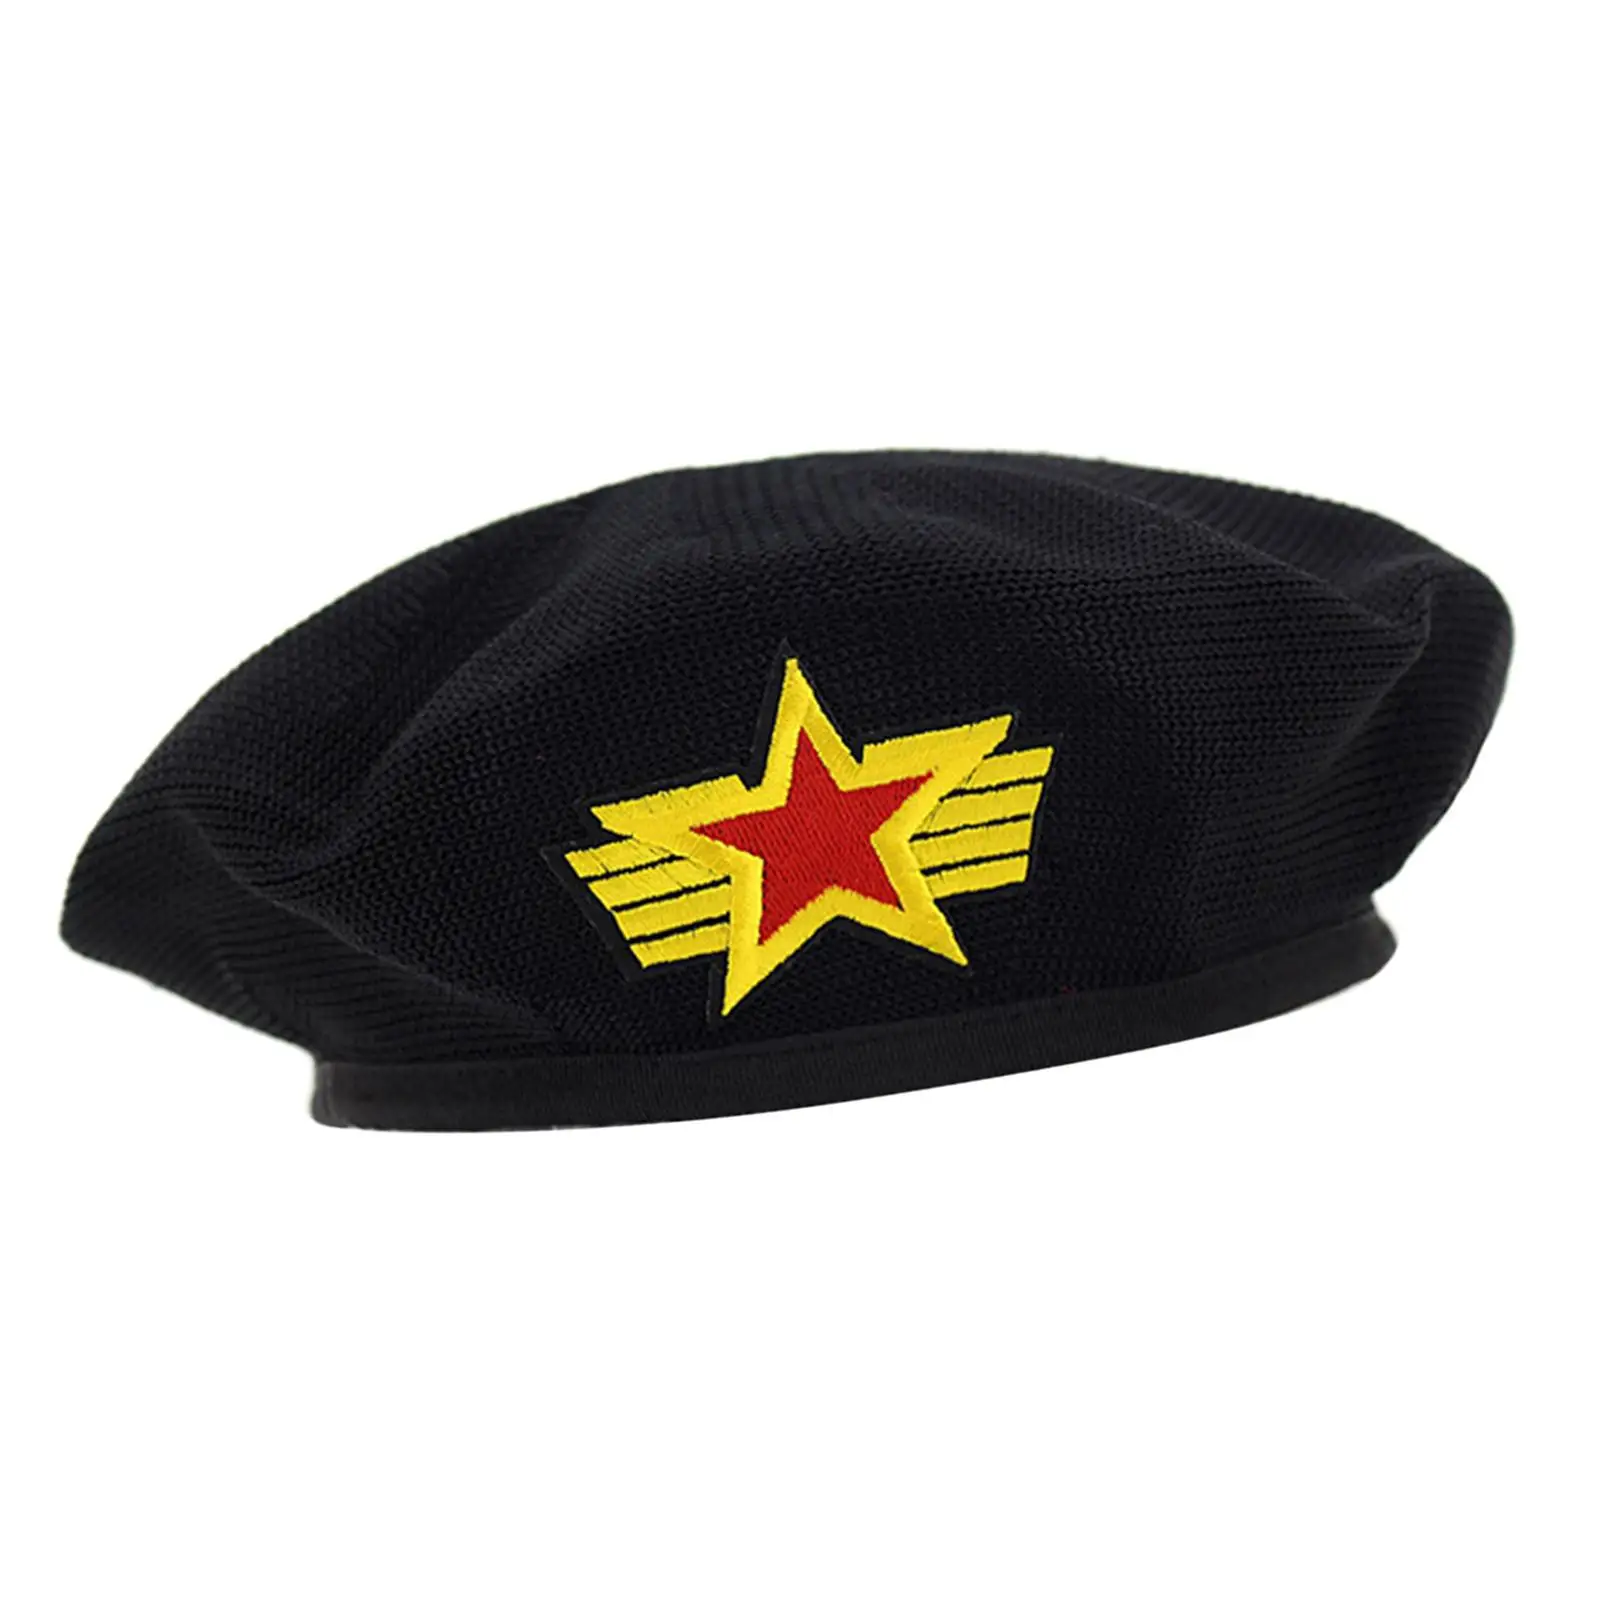 Beret Sailors Hat Pentagram  Adjustable All Seasons Unisex for Performance Stage